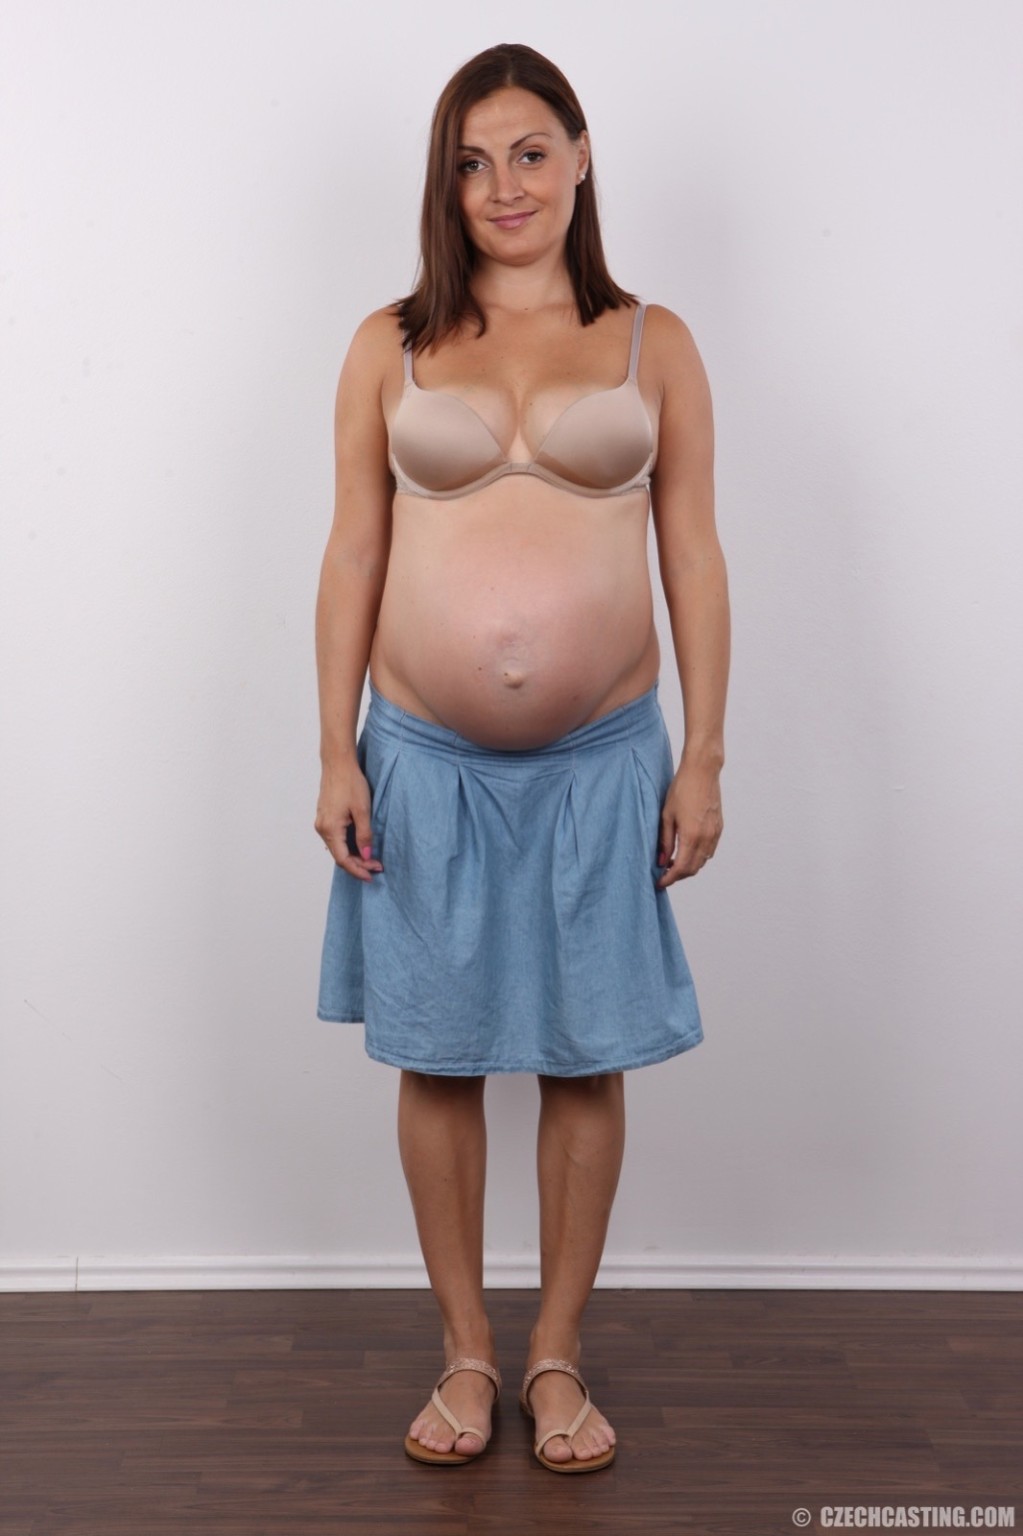 Femelle enceinte pose nue
 #67160046